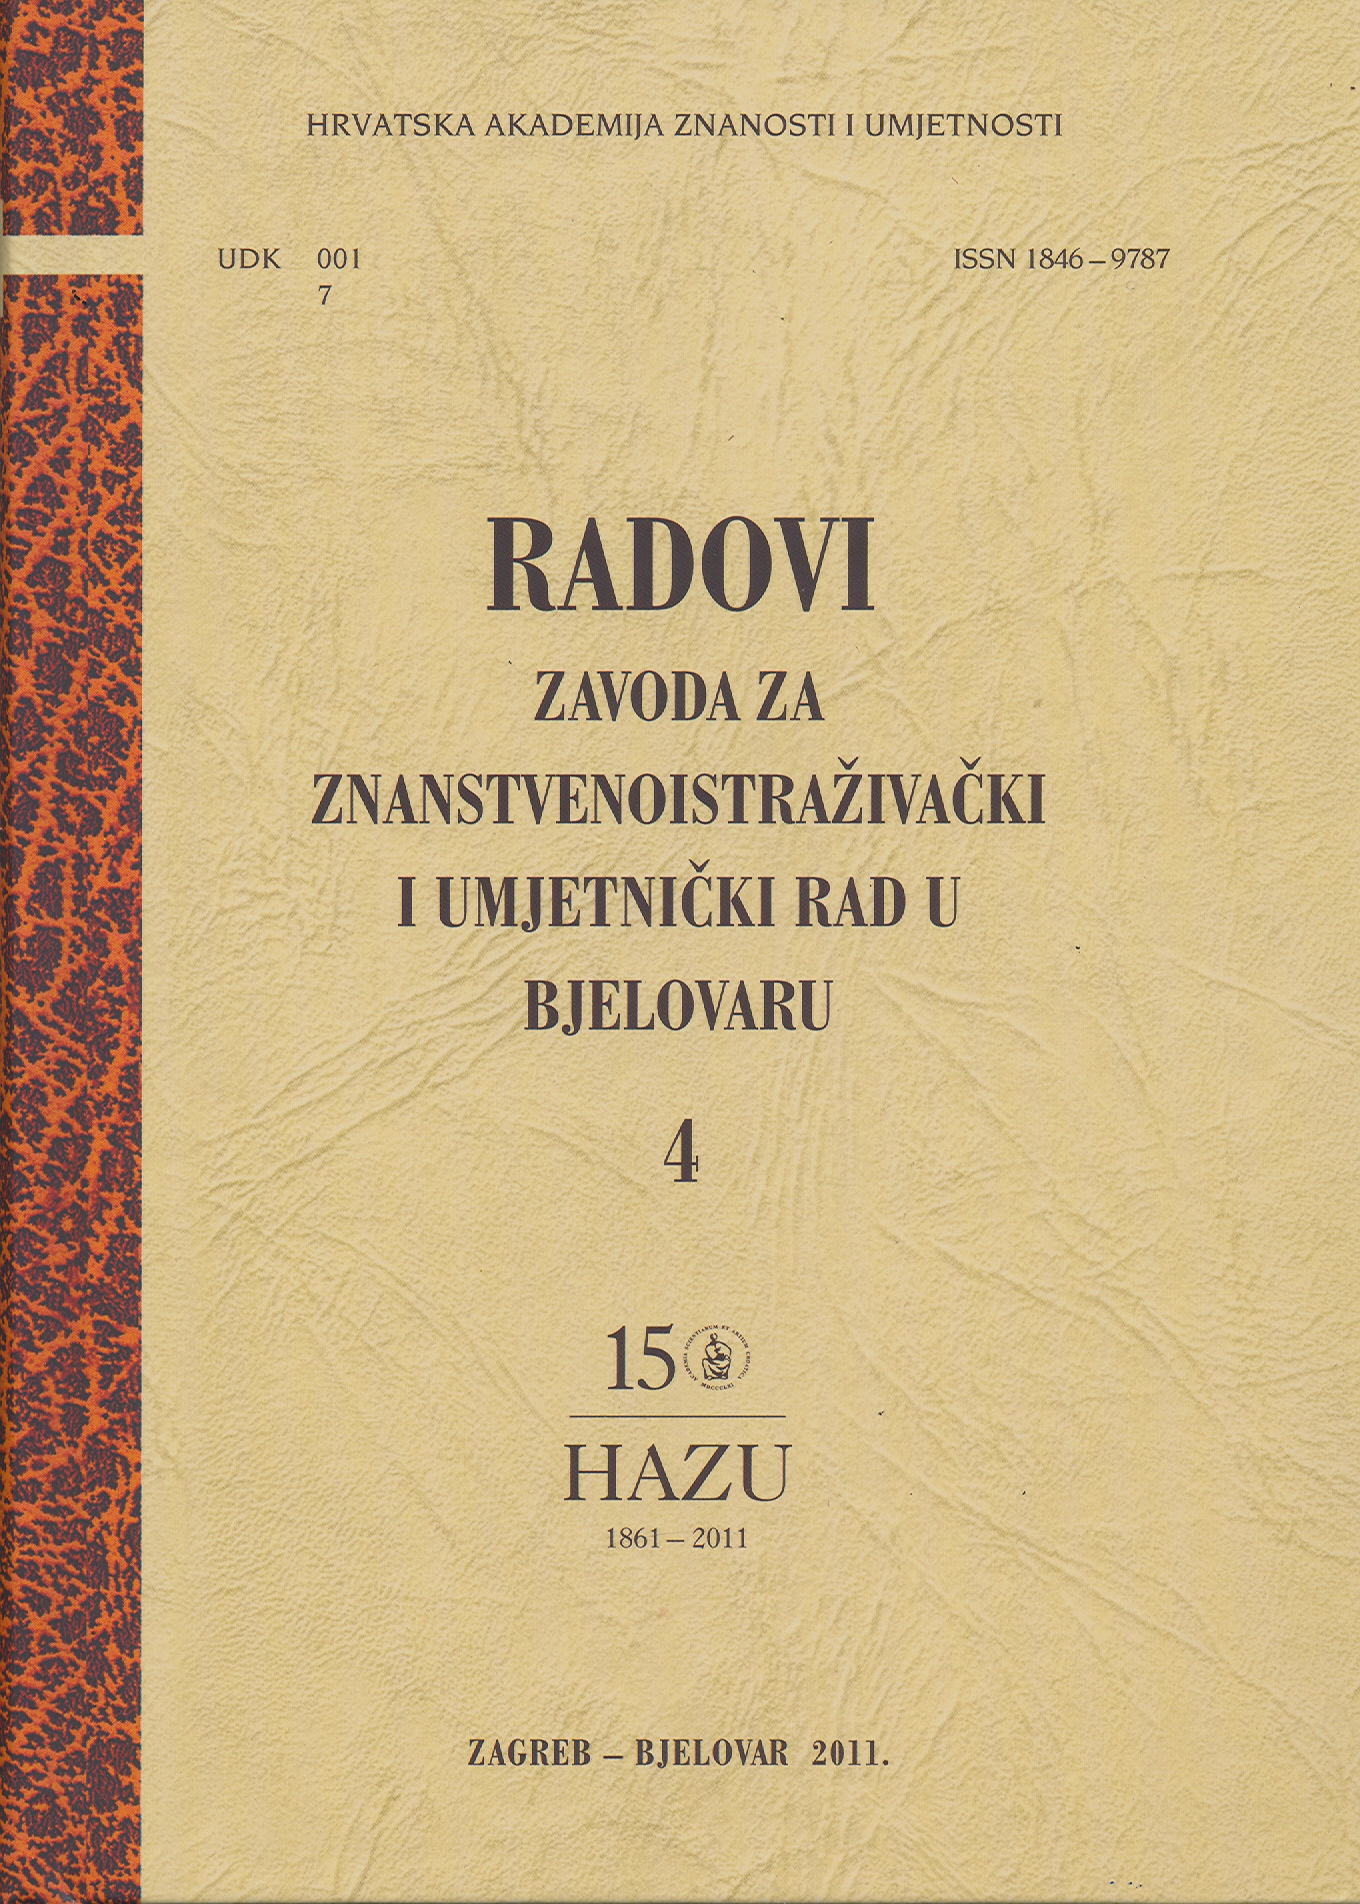 Garić-Grad – A Survey of the Technical Documentation Cover Image